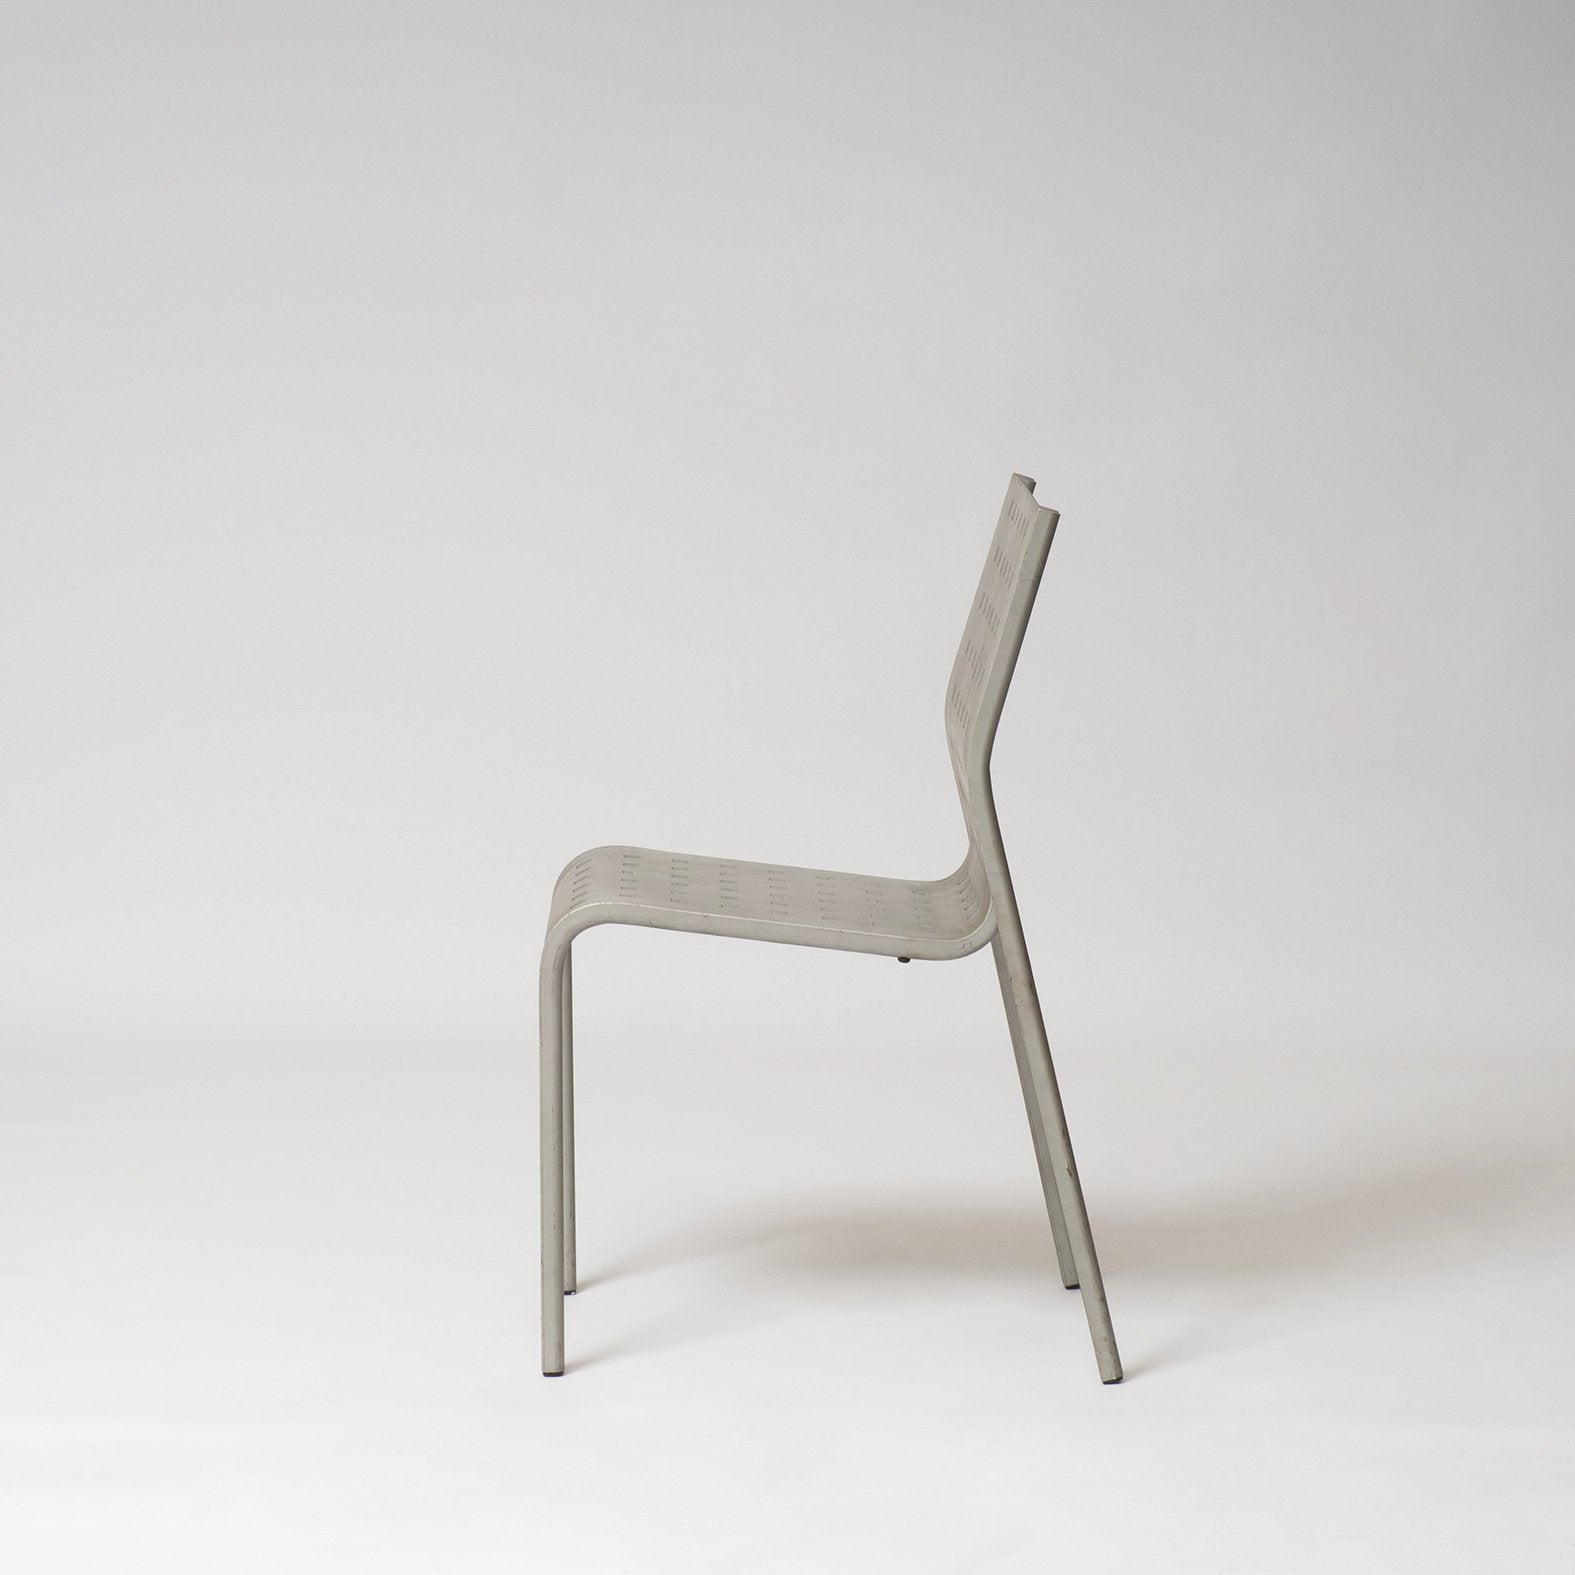 Mirandolina Chairs by Pietro Arosio for Zanotta No. 2068